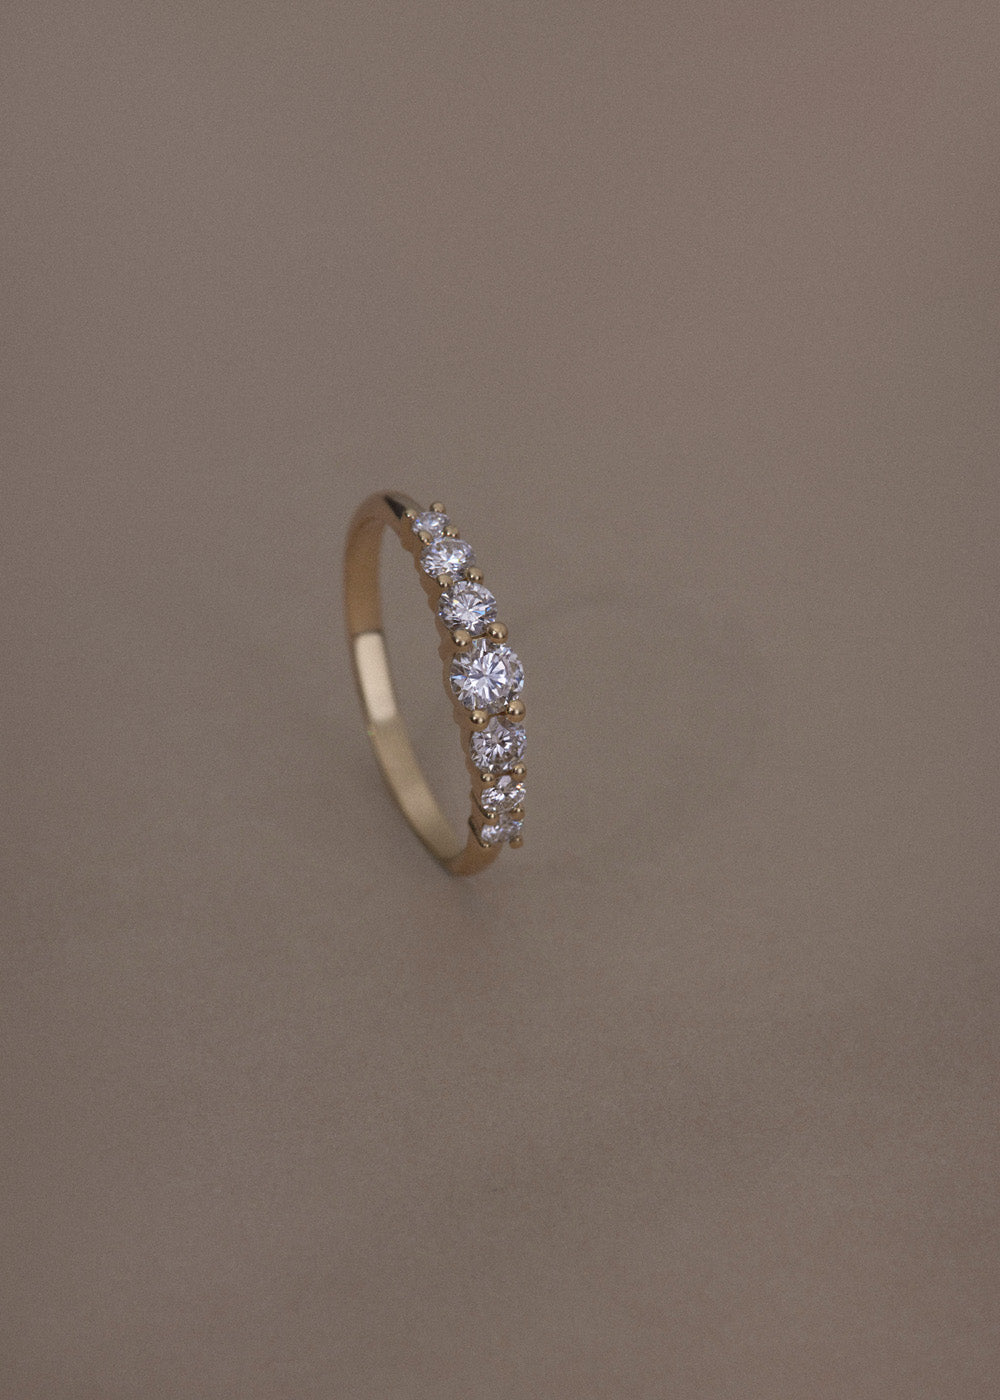 alt="Calla Round Brilliant Diamond Ring"